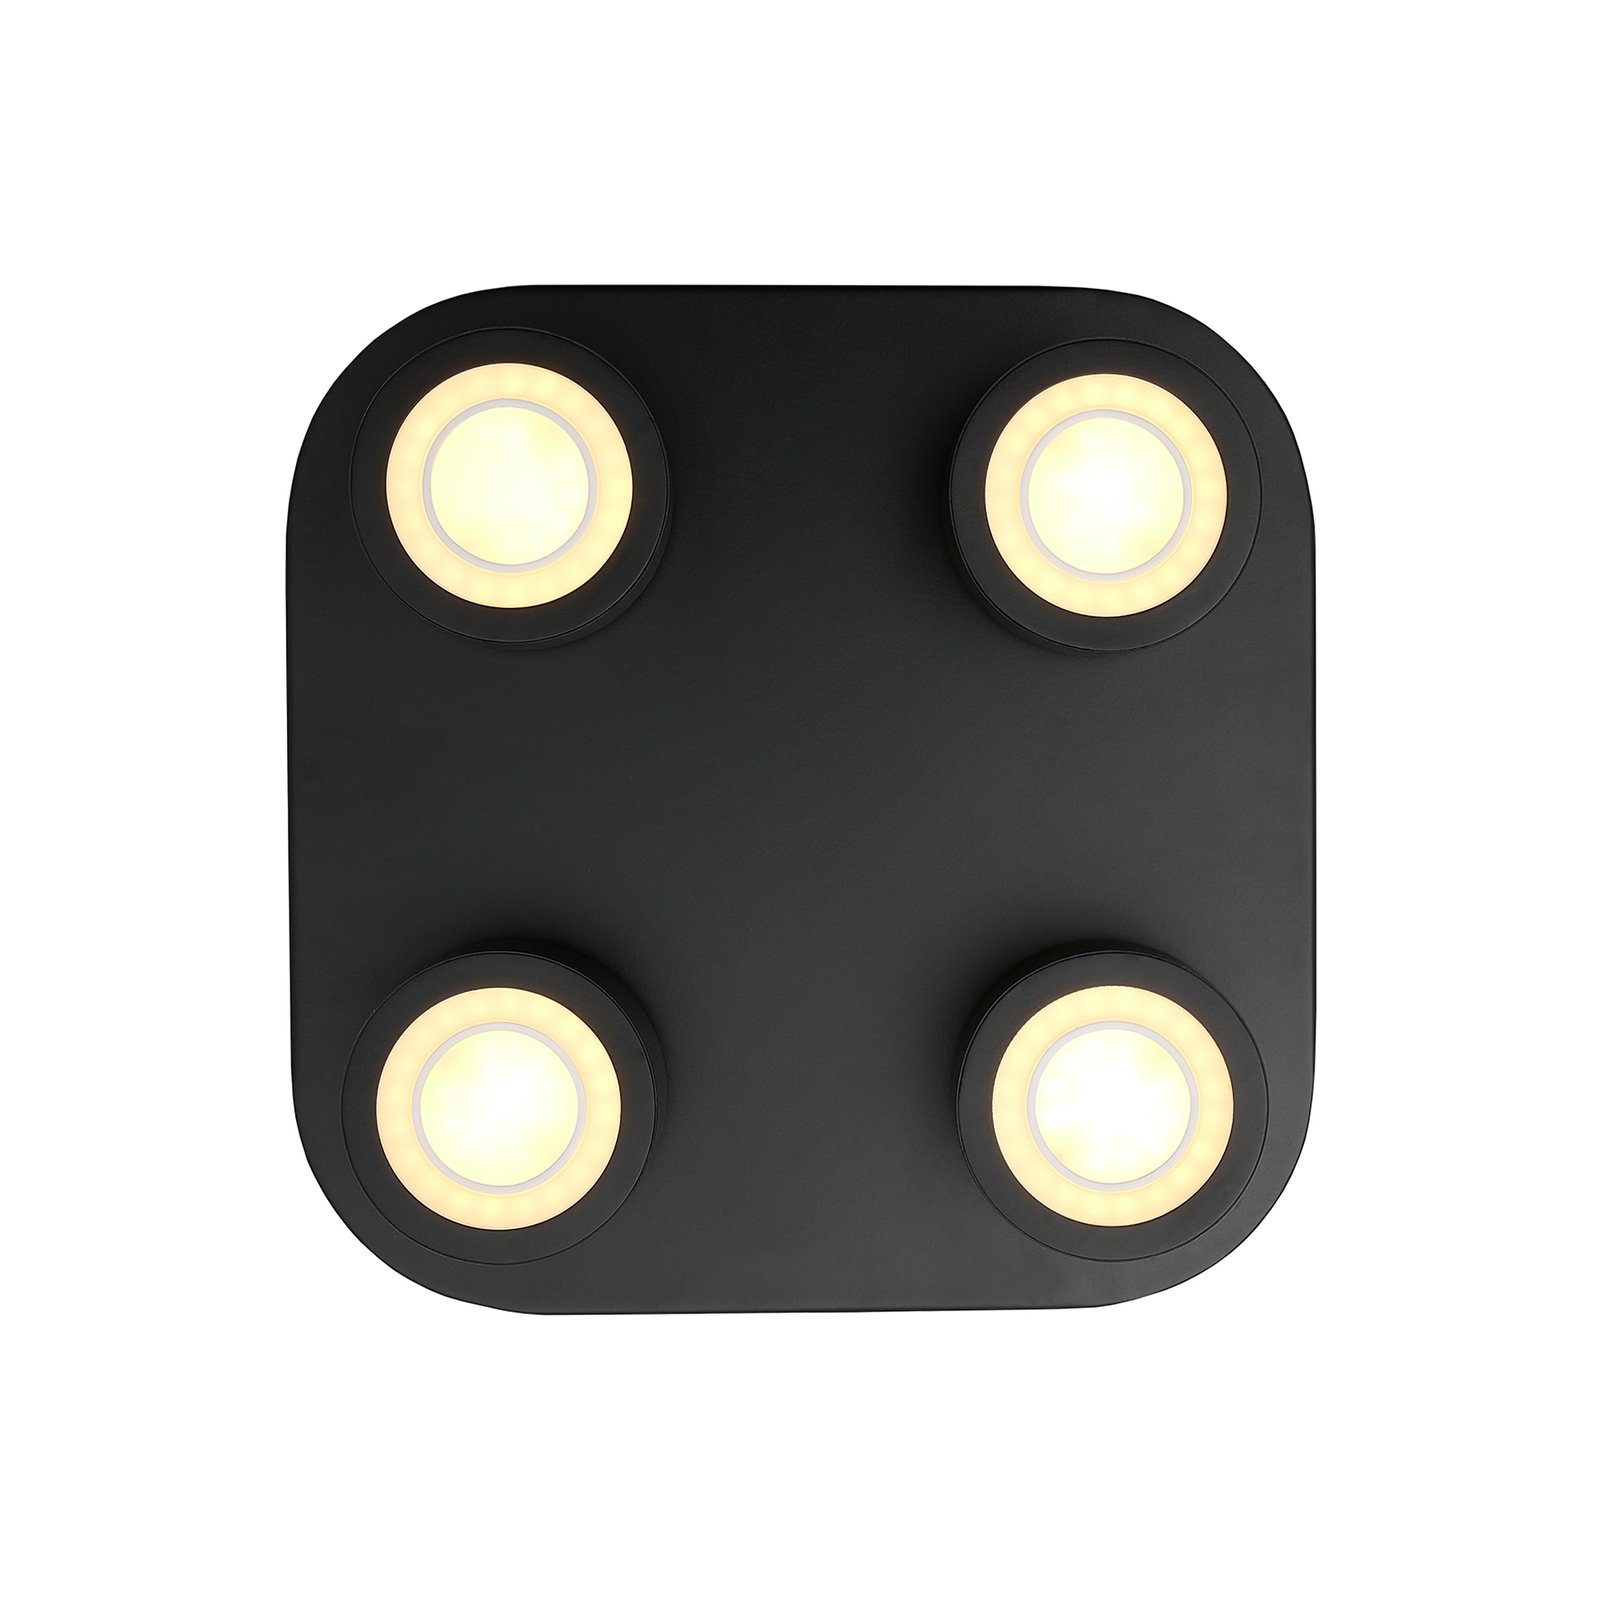 Lampa sufitowa LED Clyde, 4-punktowa, kwadratowa, czarna